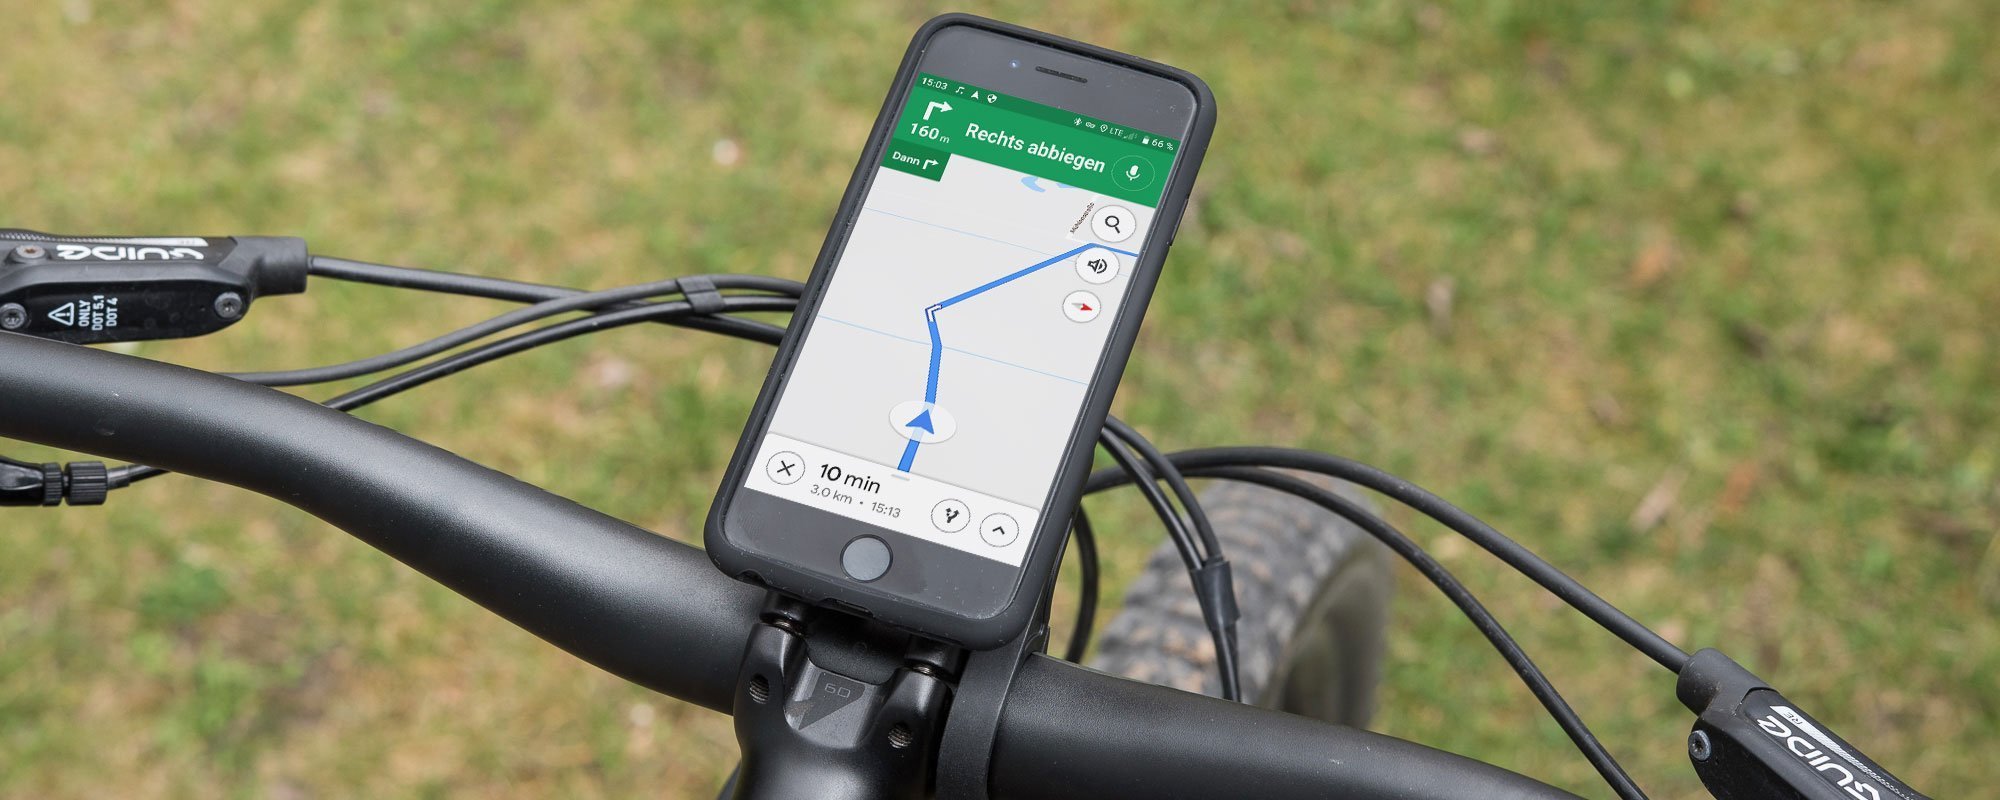 Google Maps im Test » Fahrradnavigation mit dem Smartphone